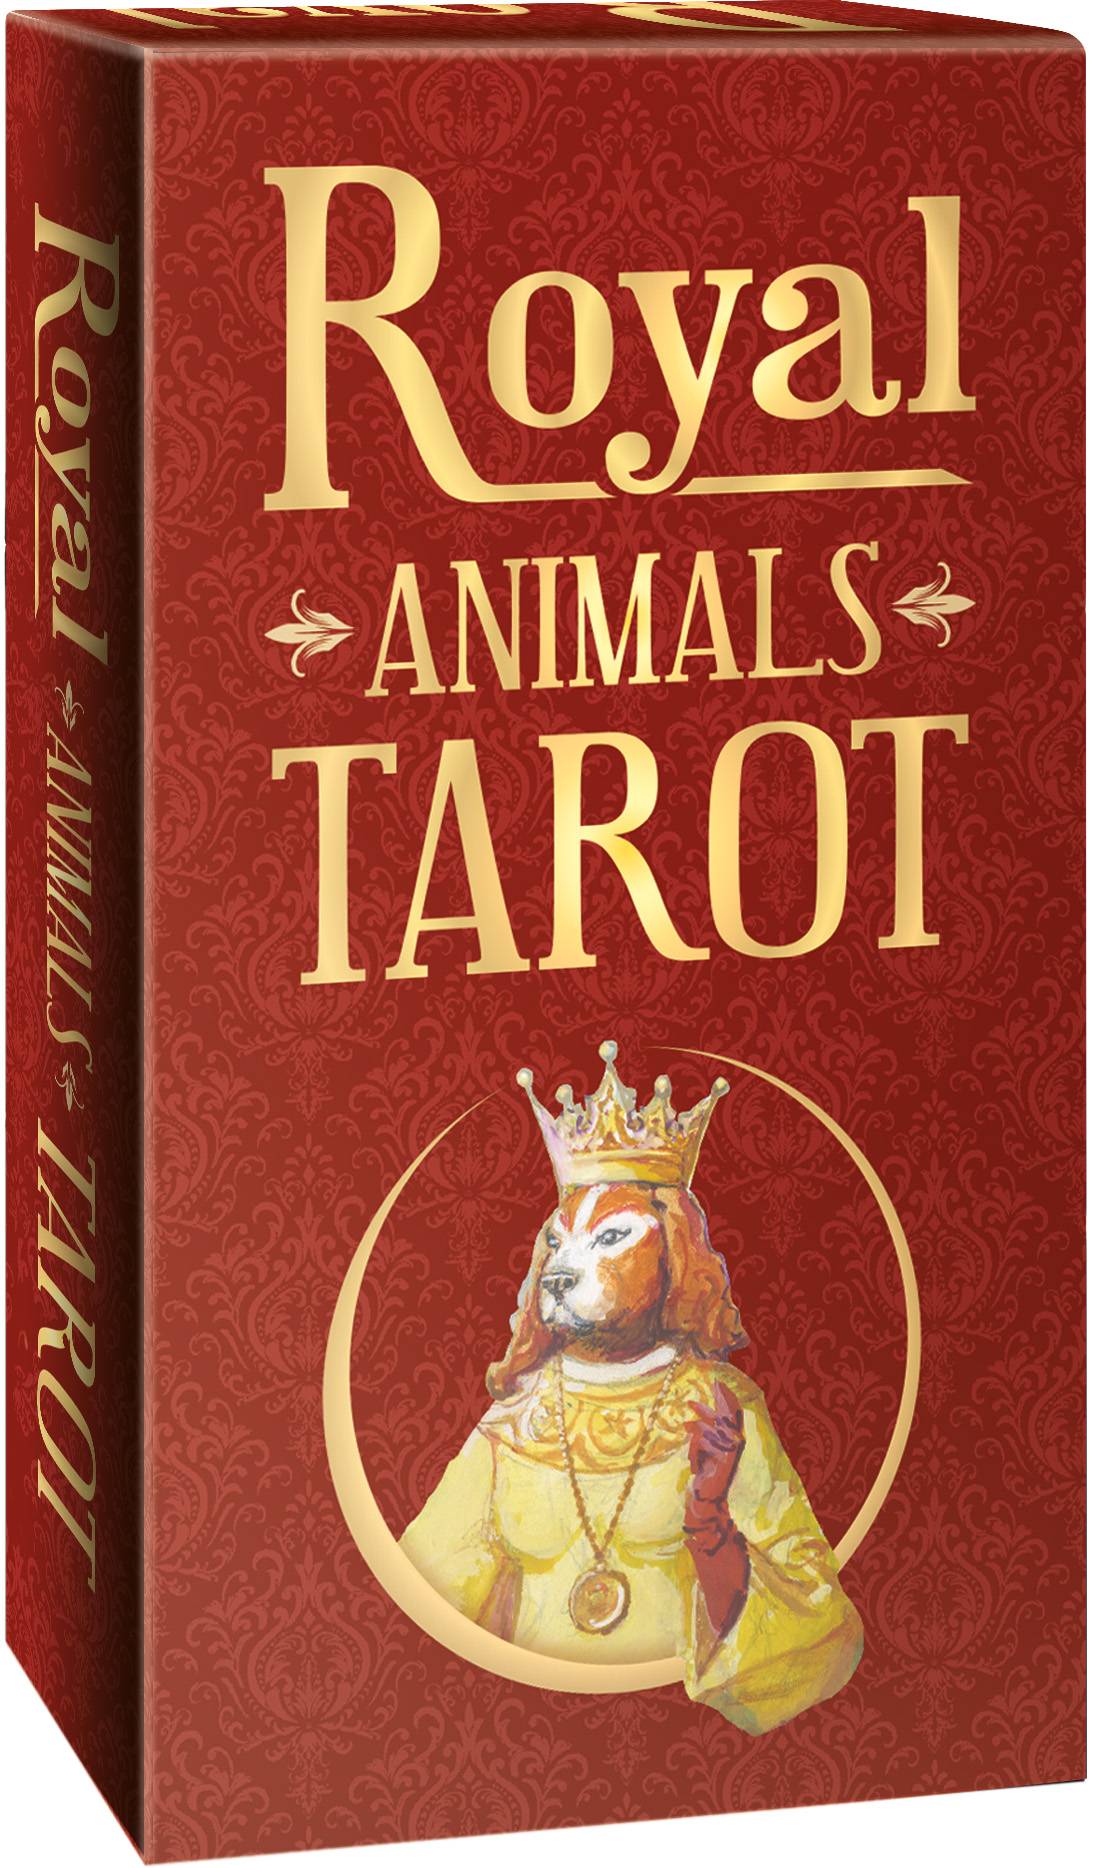 Royal Animals Tarot (limited edition)